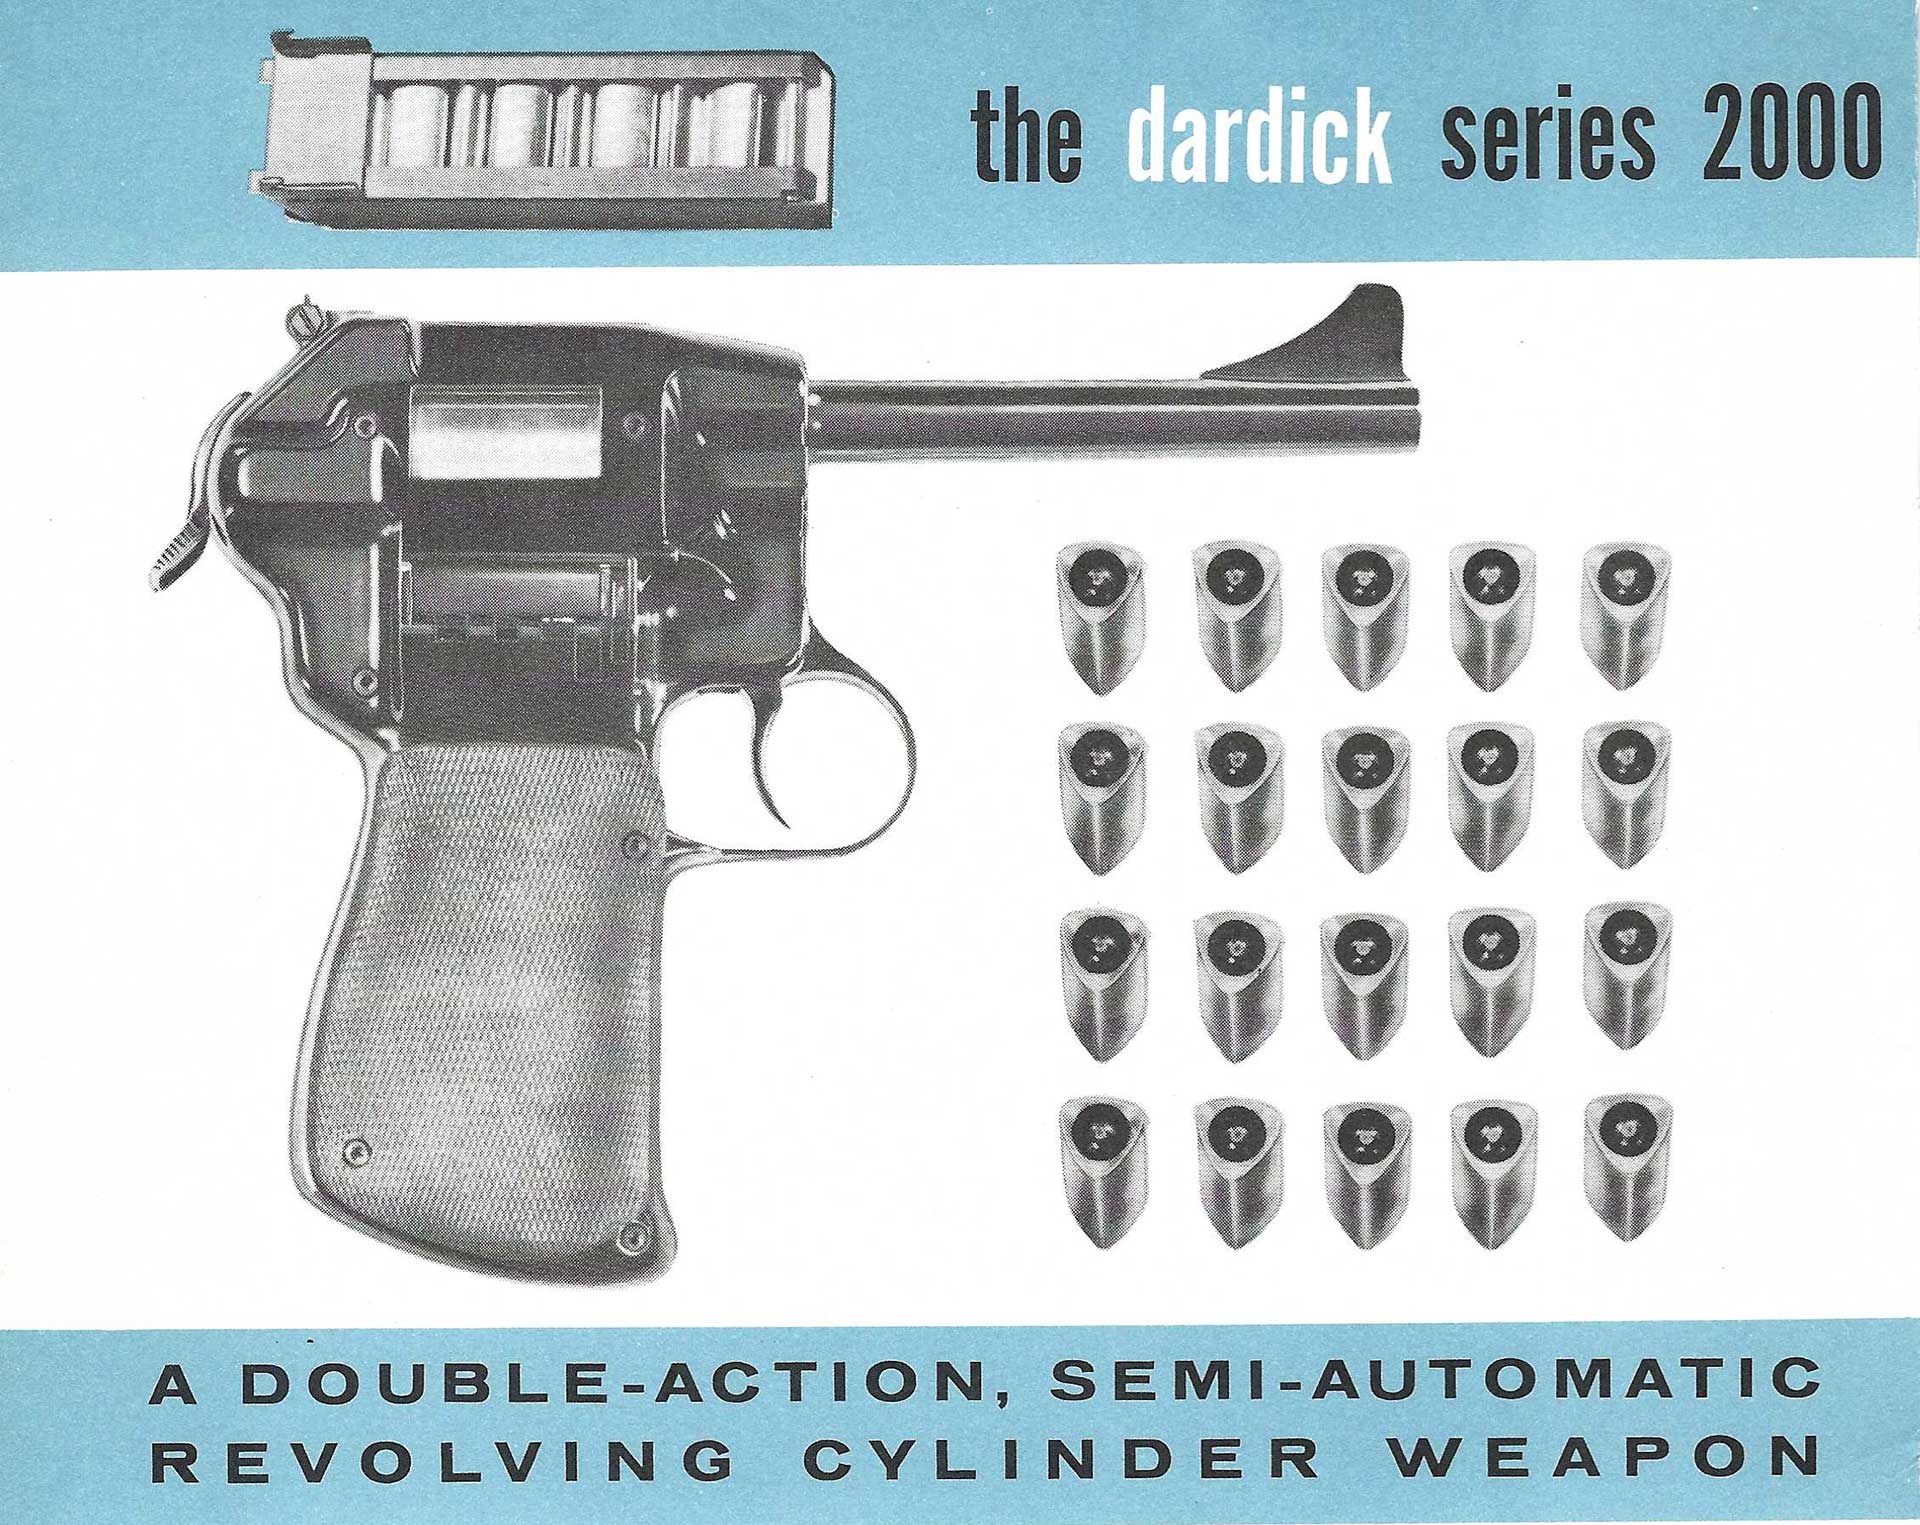 A Dardick Series 2000 advertising poster.